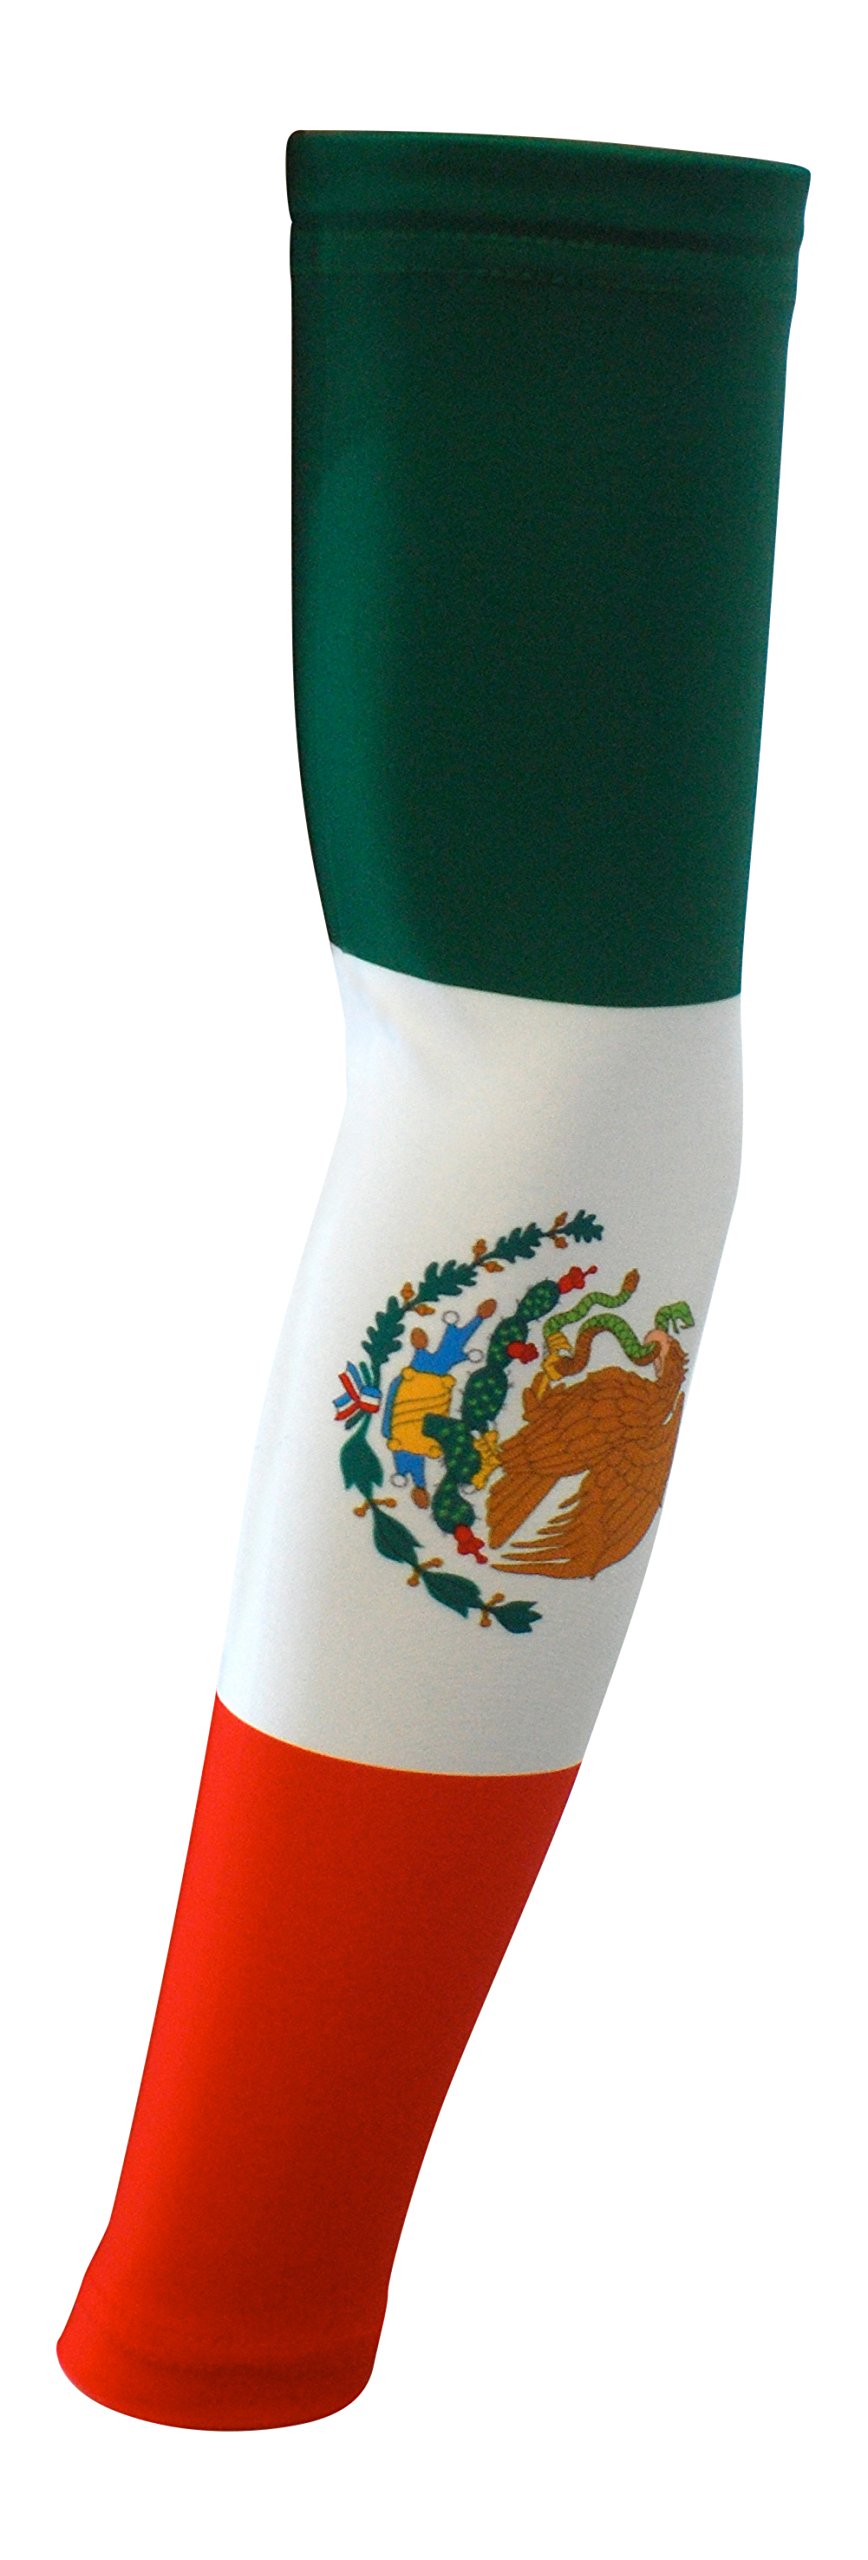 Sportsfarm New - Mexico Flag Compression Arm Sleeve (Large)